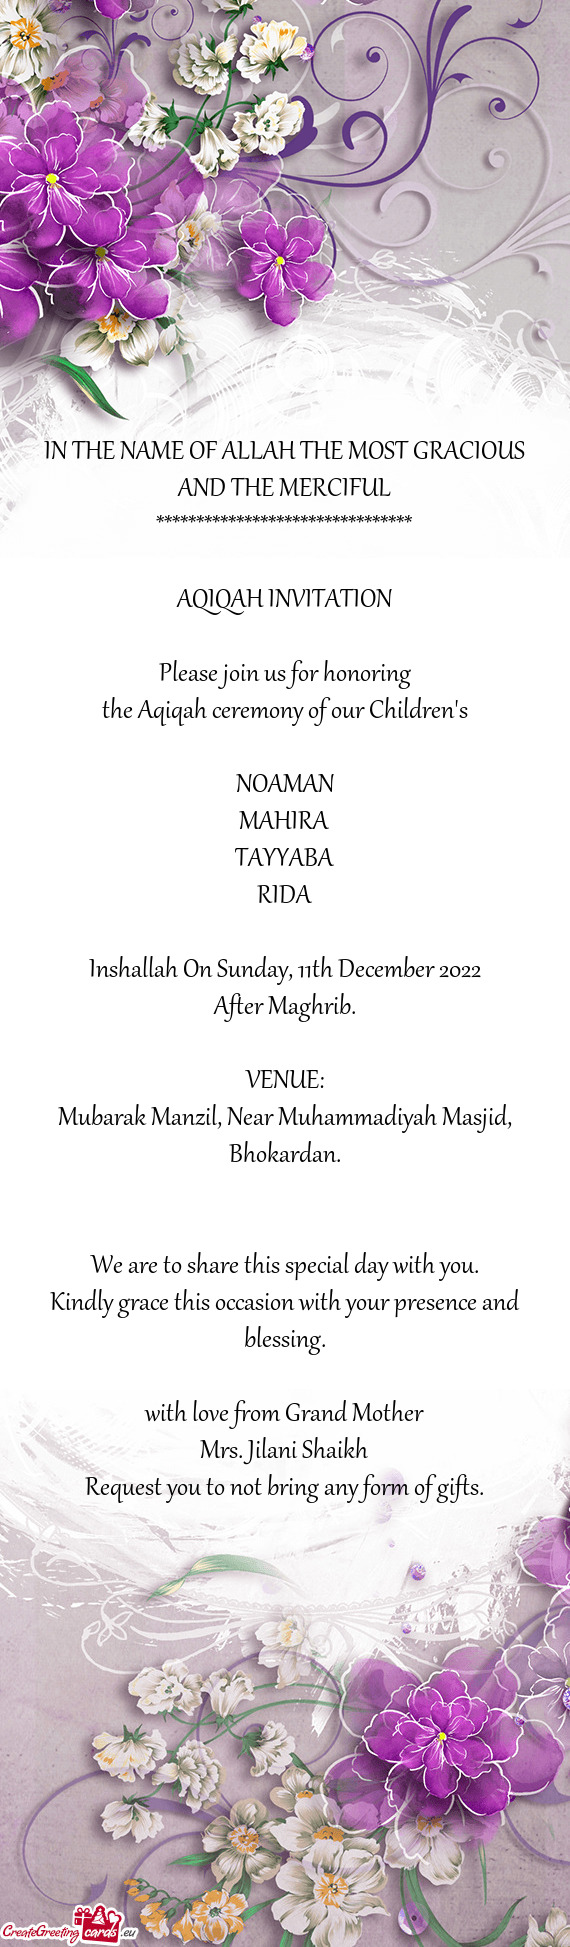 Inshallah On Sunday, 11th December 2022